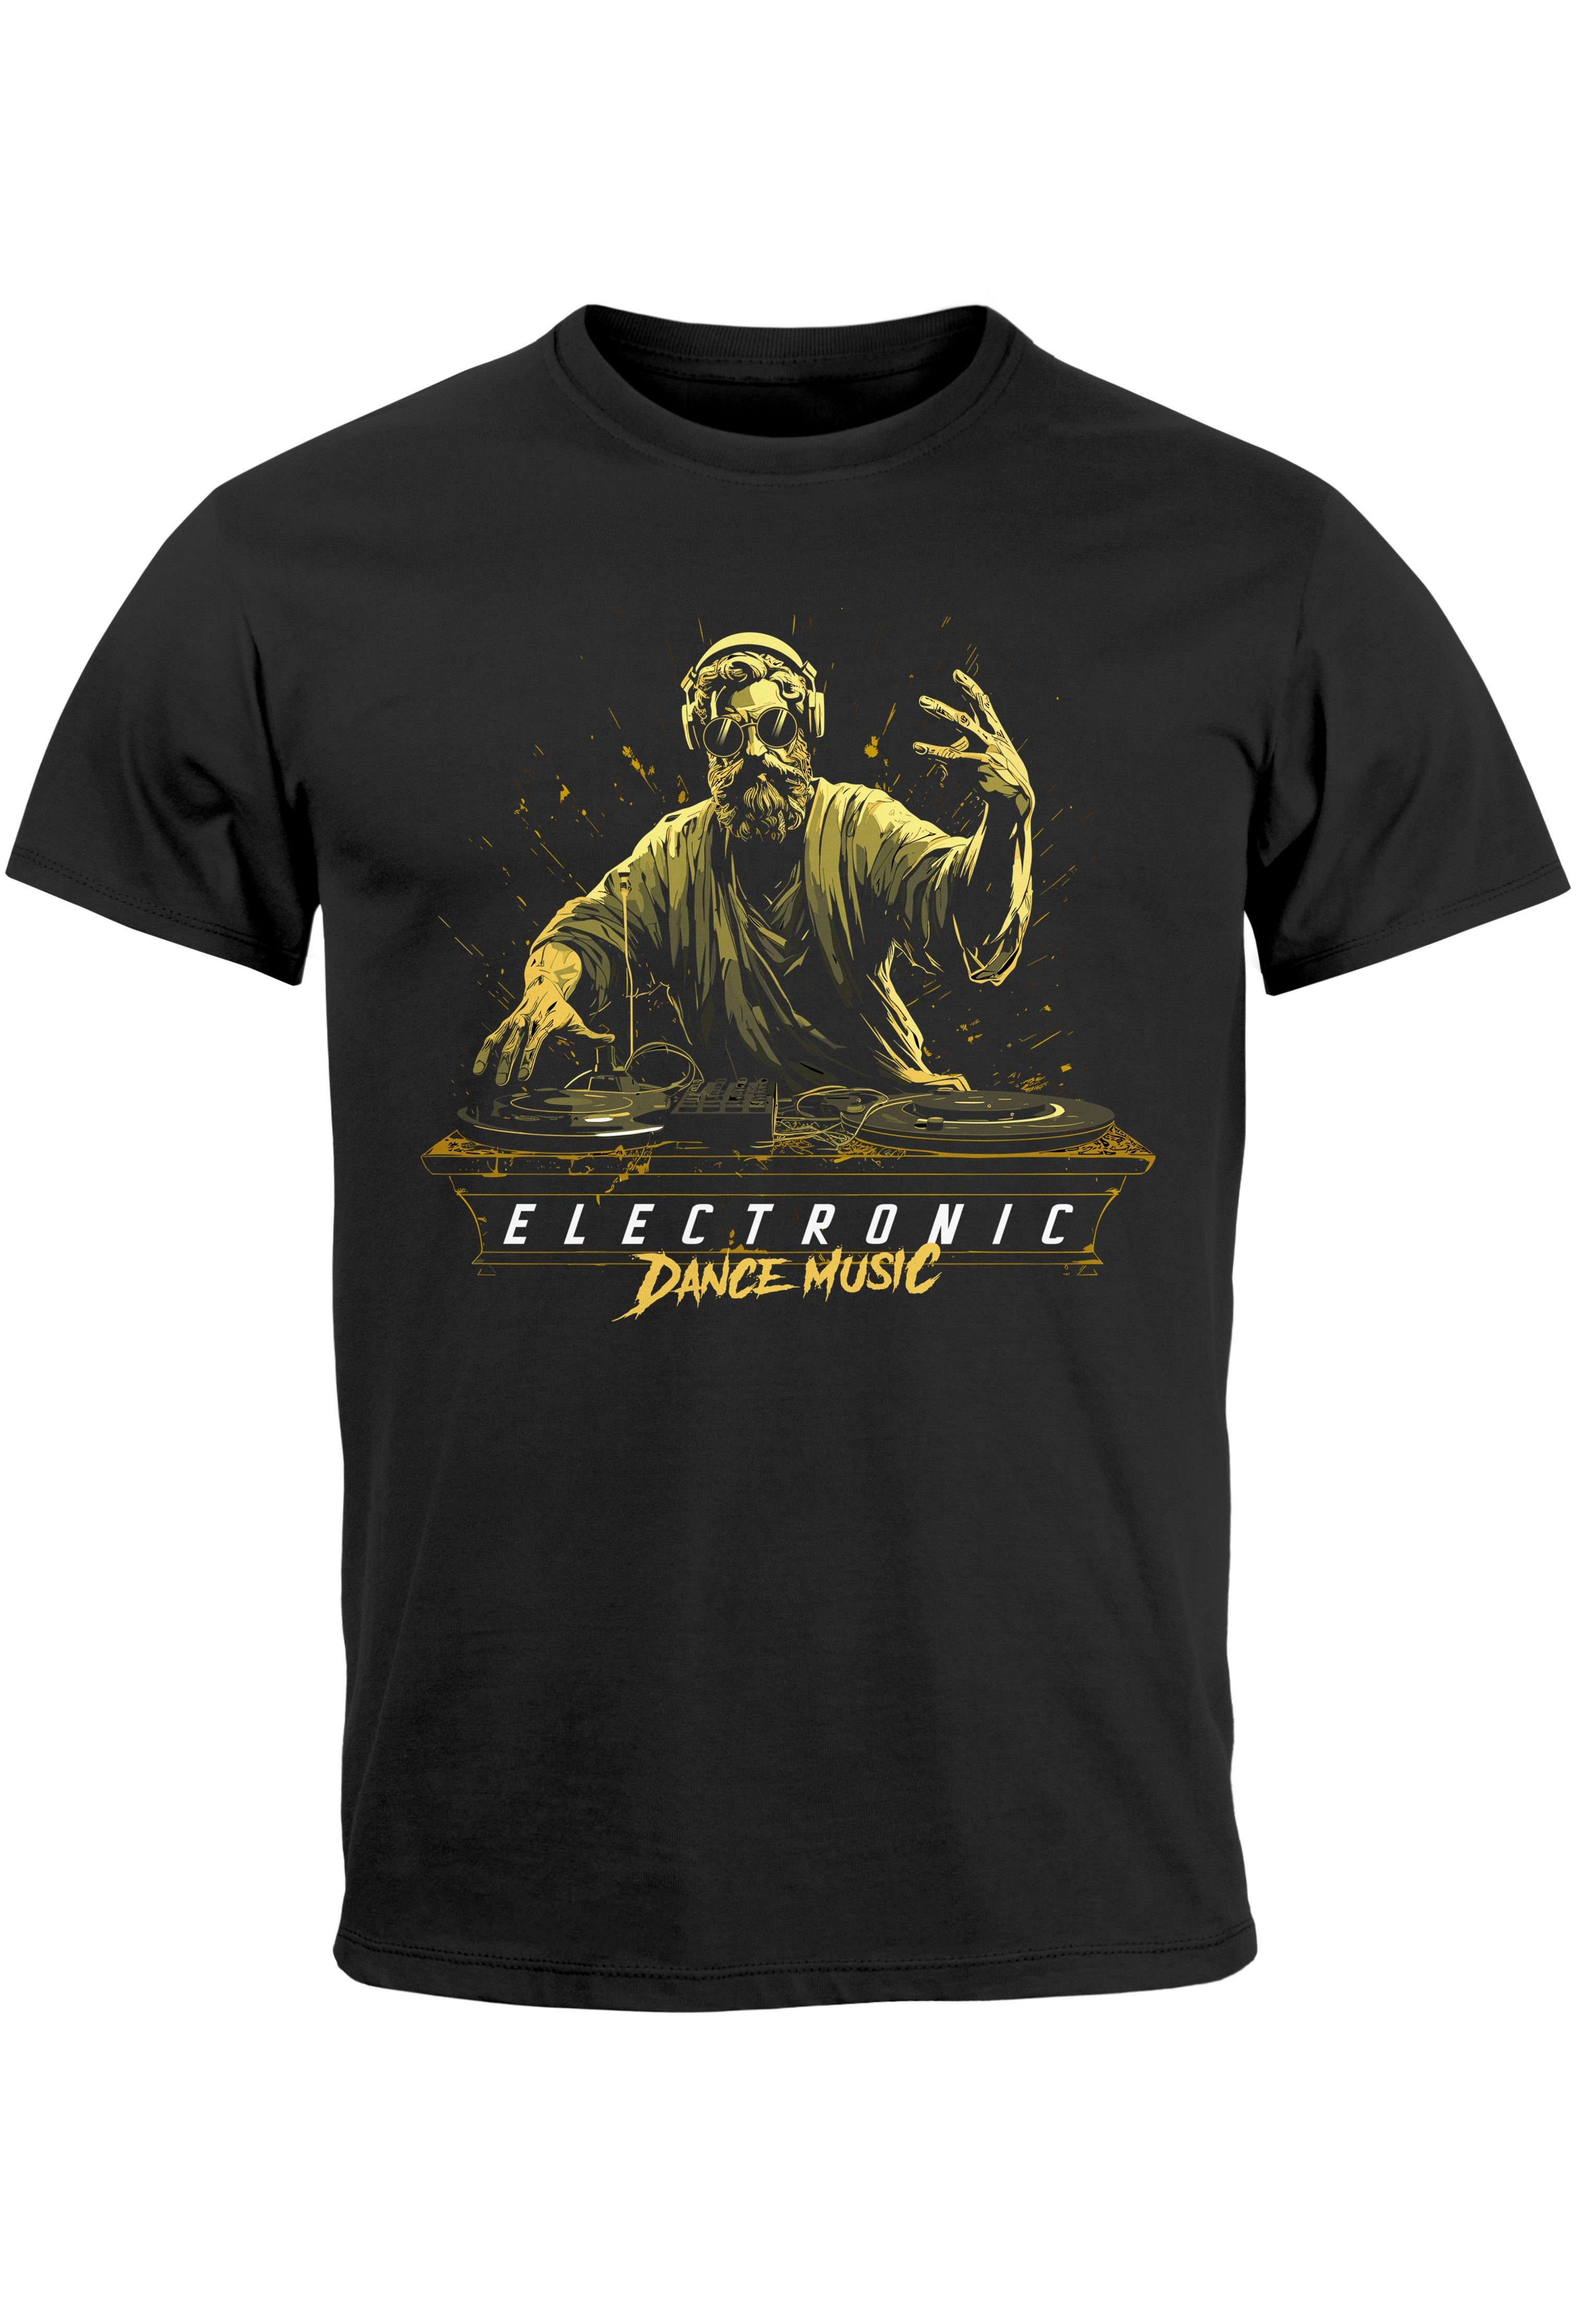 Print Herren Neverless Music Print-Shirt Dance mit Str MichelangeloTechno DJ Fashion schwarz Eletronic T-Shirt